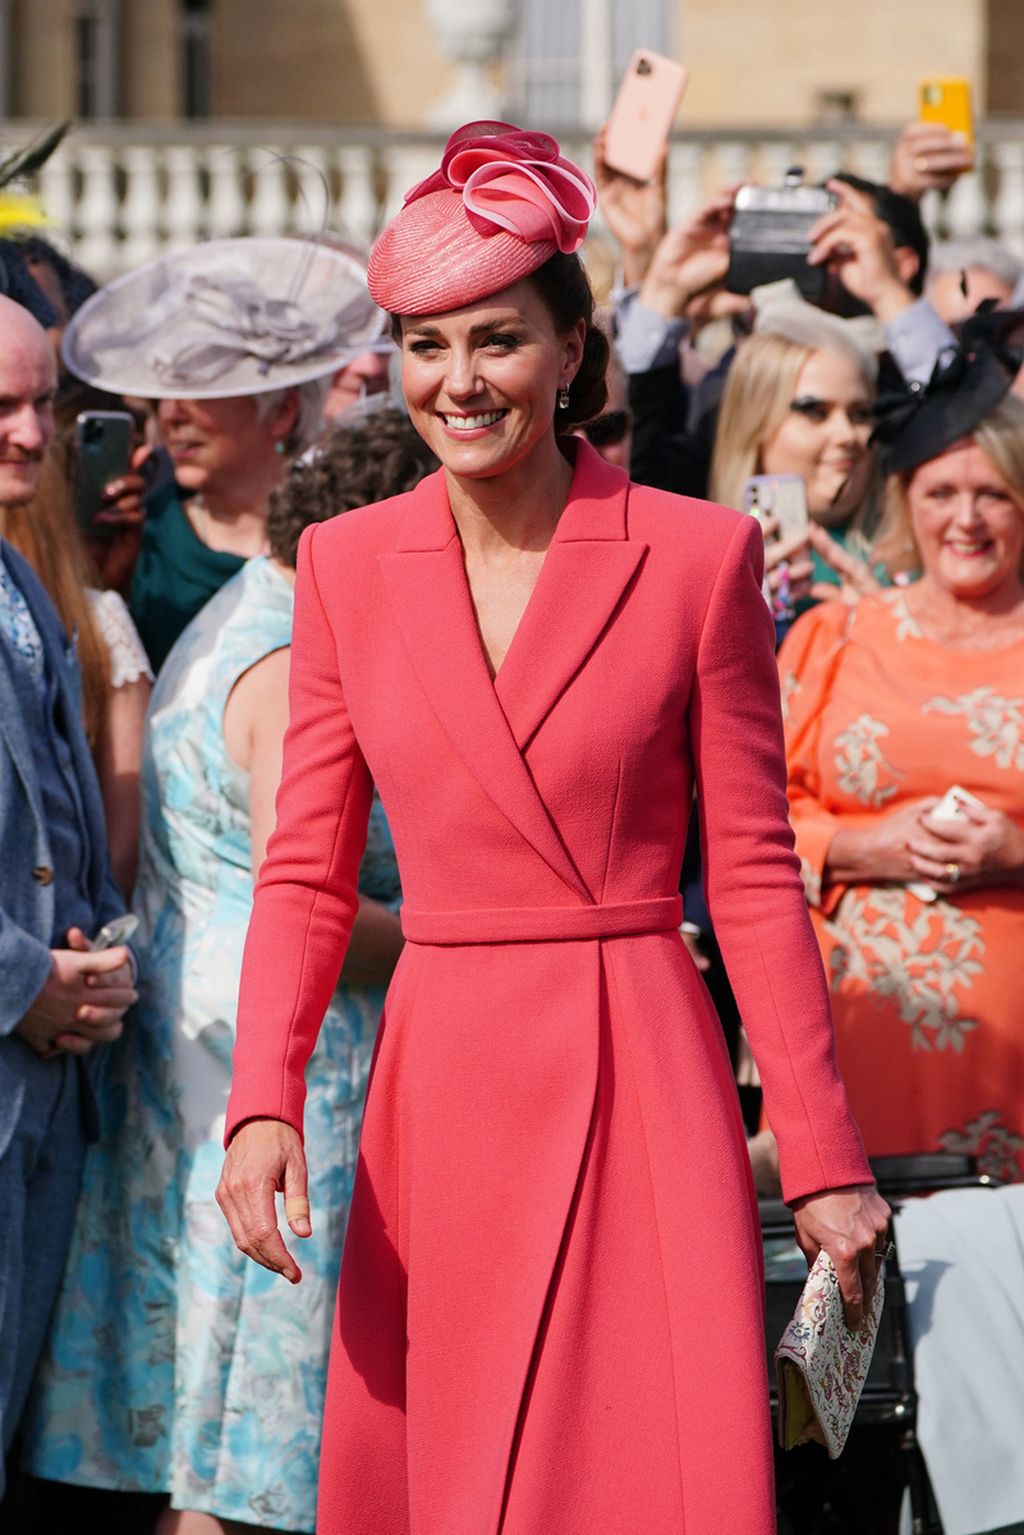  Duchess of Cambridge Catherine tersenyum menyapa para tamu di acara Royal Garden Party di Istana Buckingham, London, Rabu (18/5/2022).  